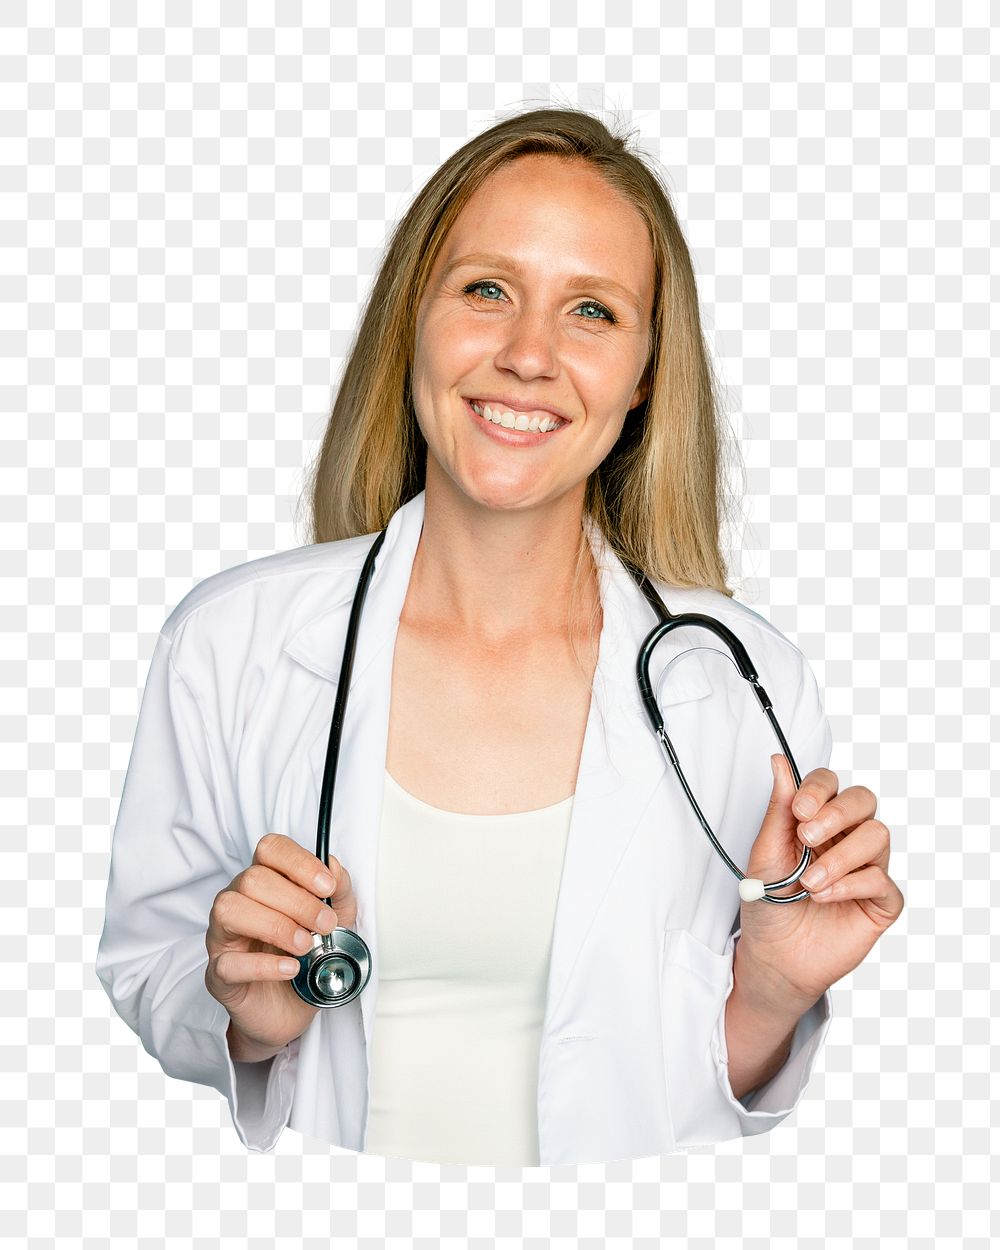 Female doctor png sticker, transparent background